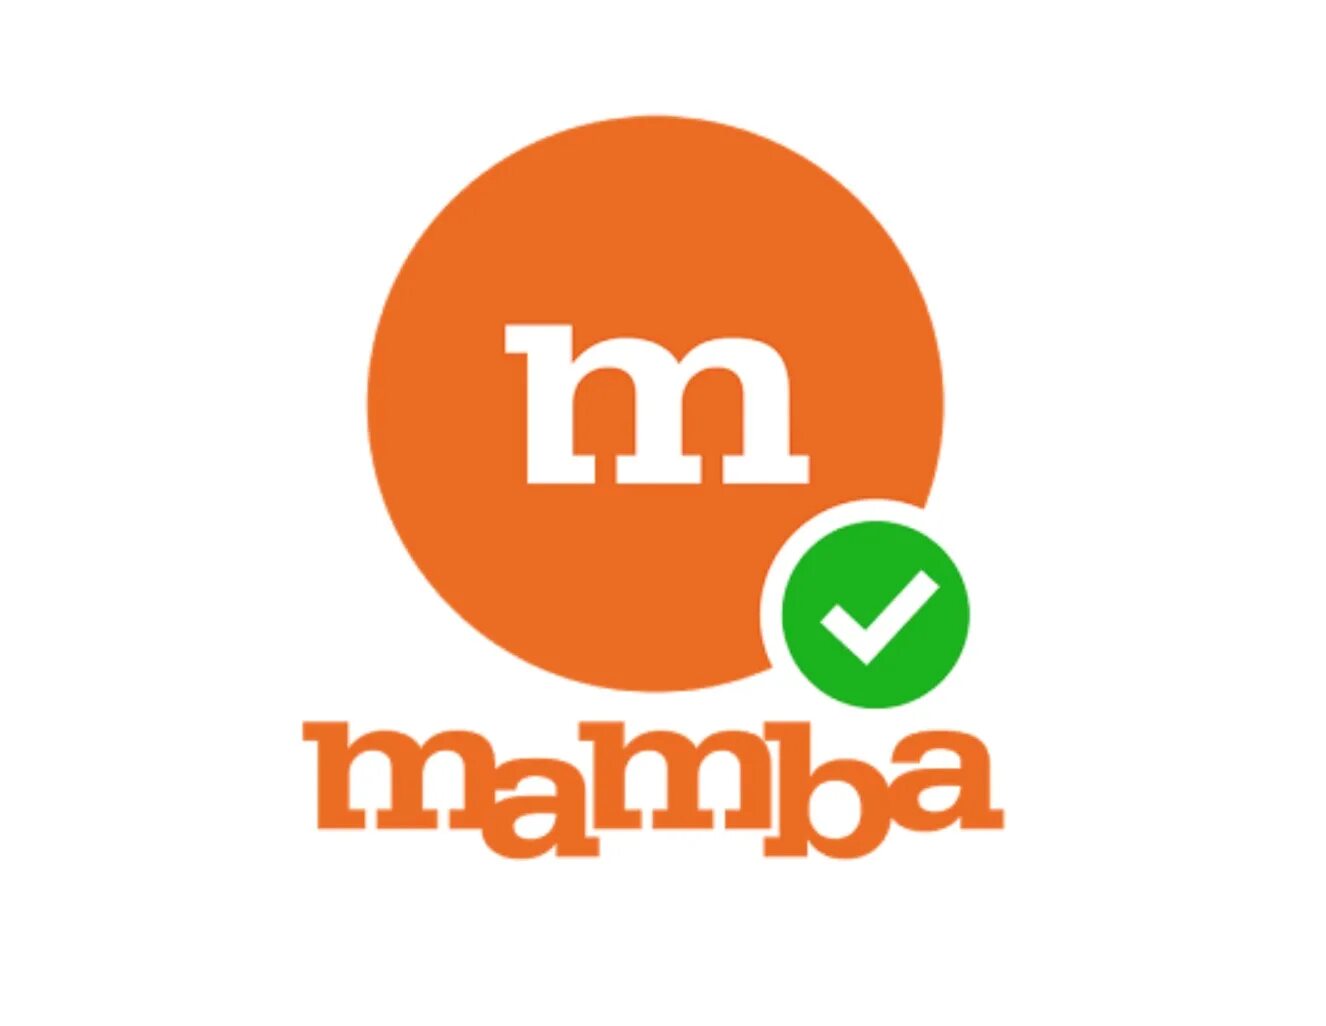 Http mamba. Мамба. Мамба лого. Мамба приложение. Значок сайта мамба.